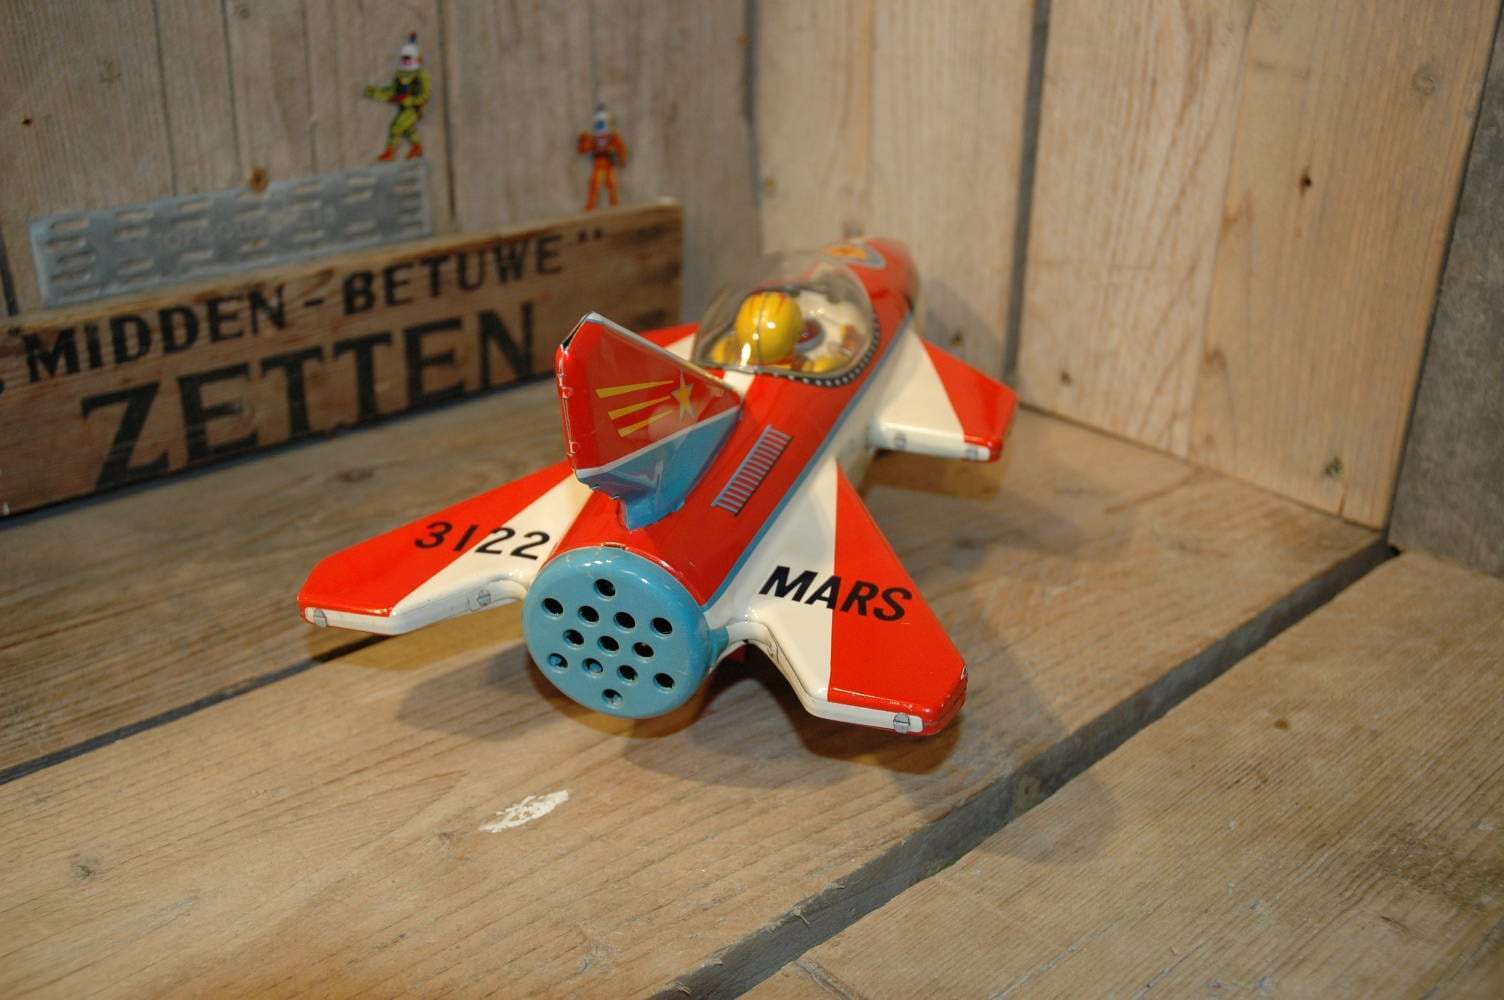 Modern Toys - Mars Rocket